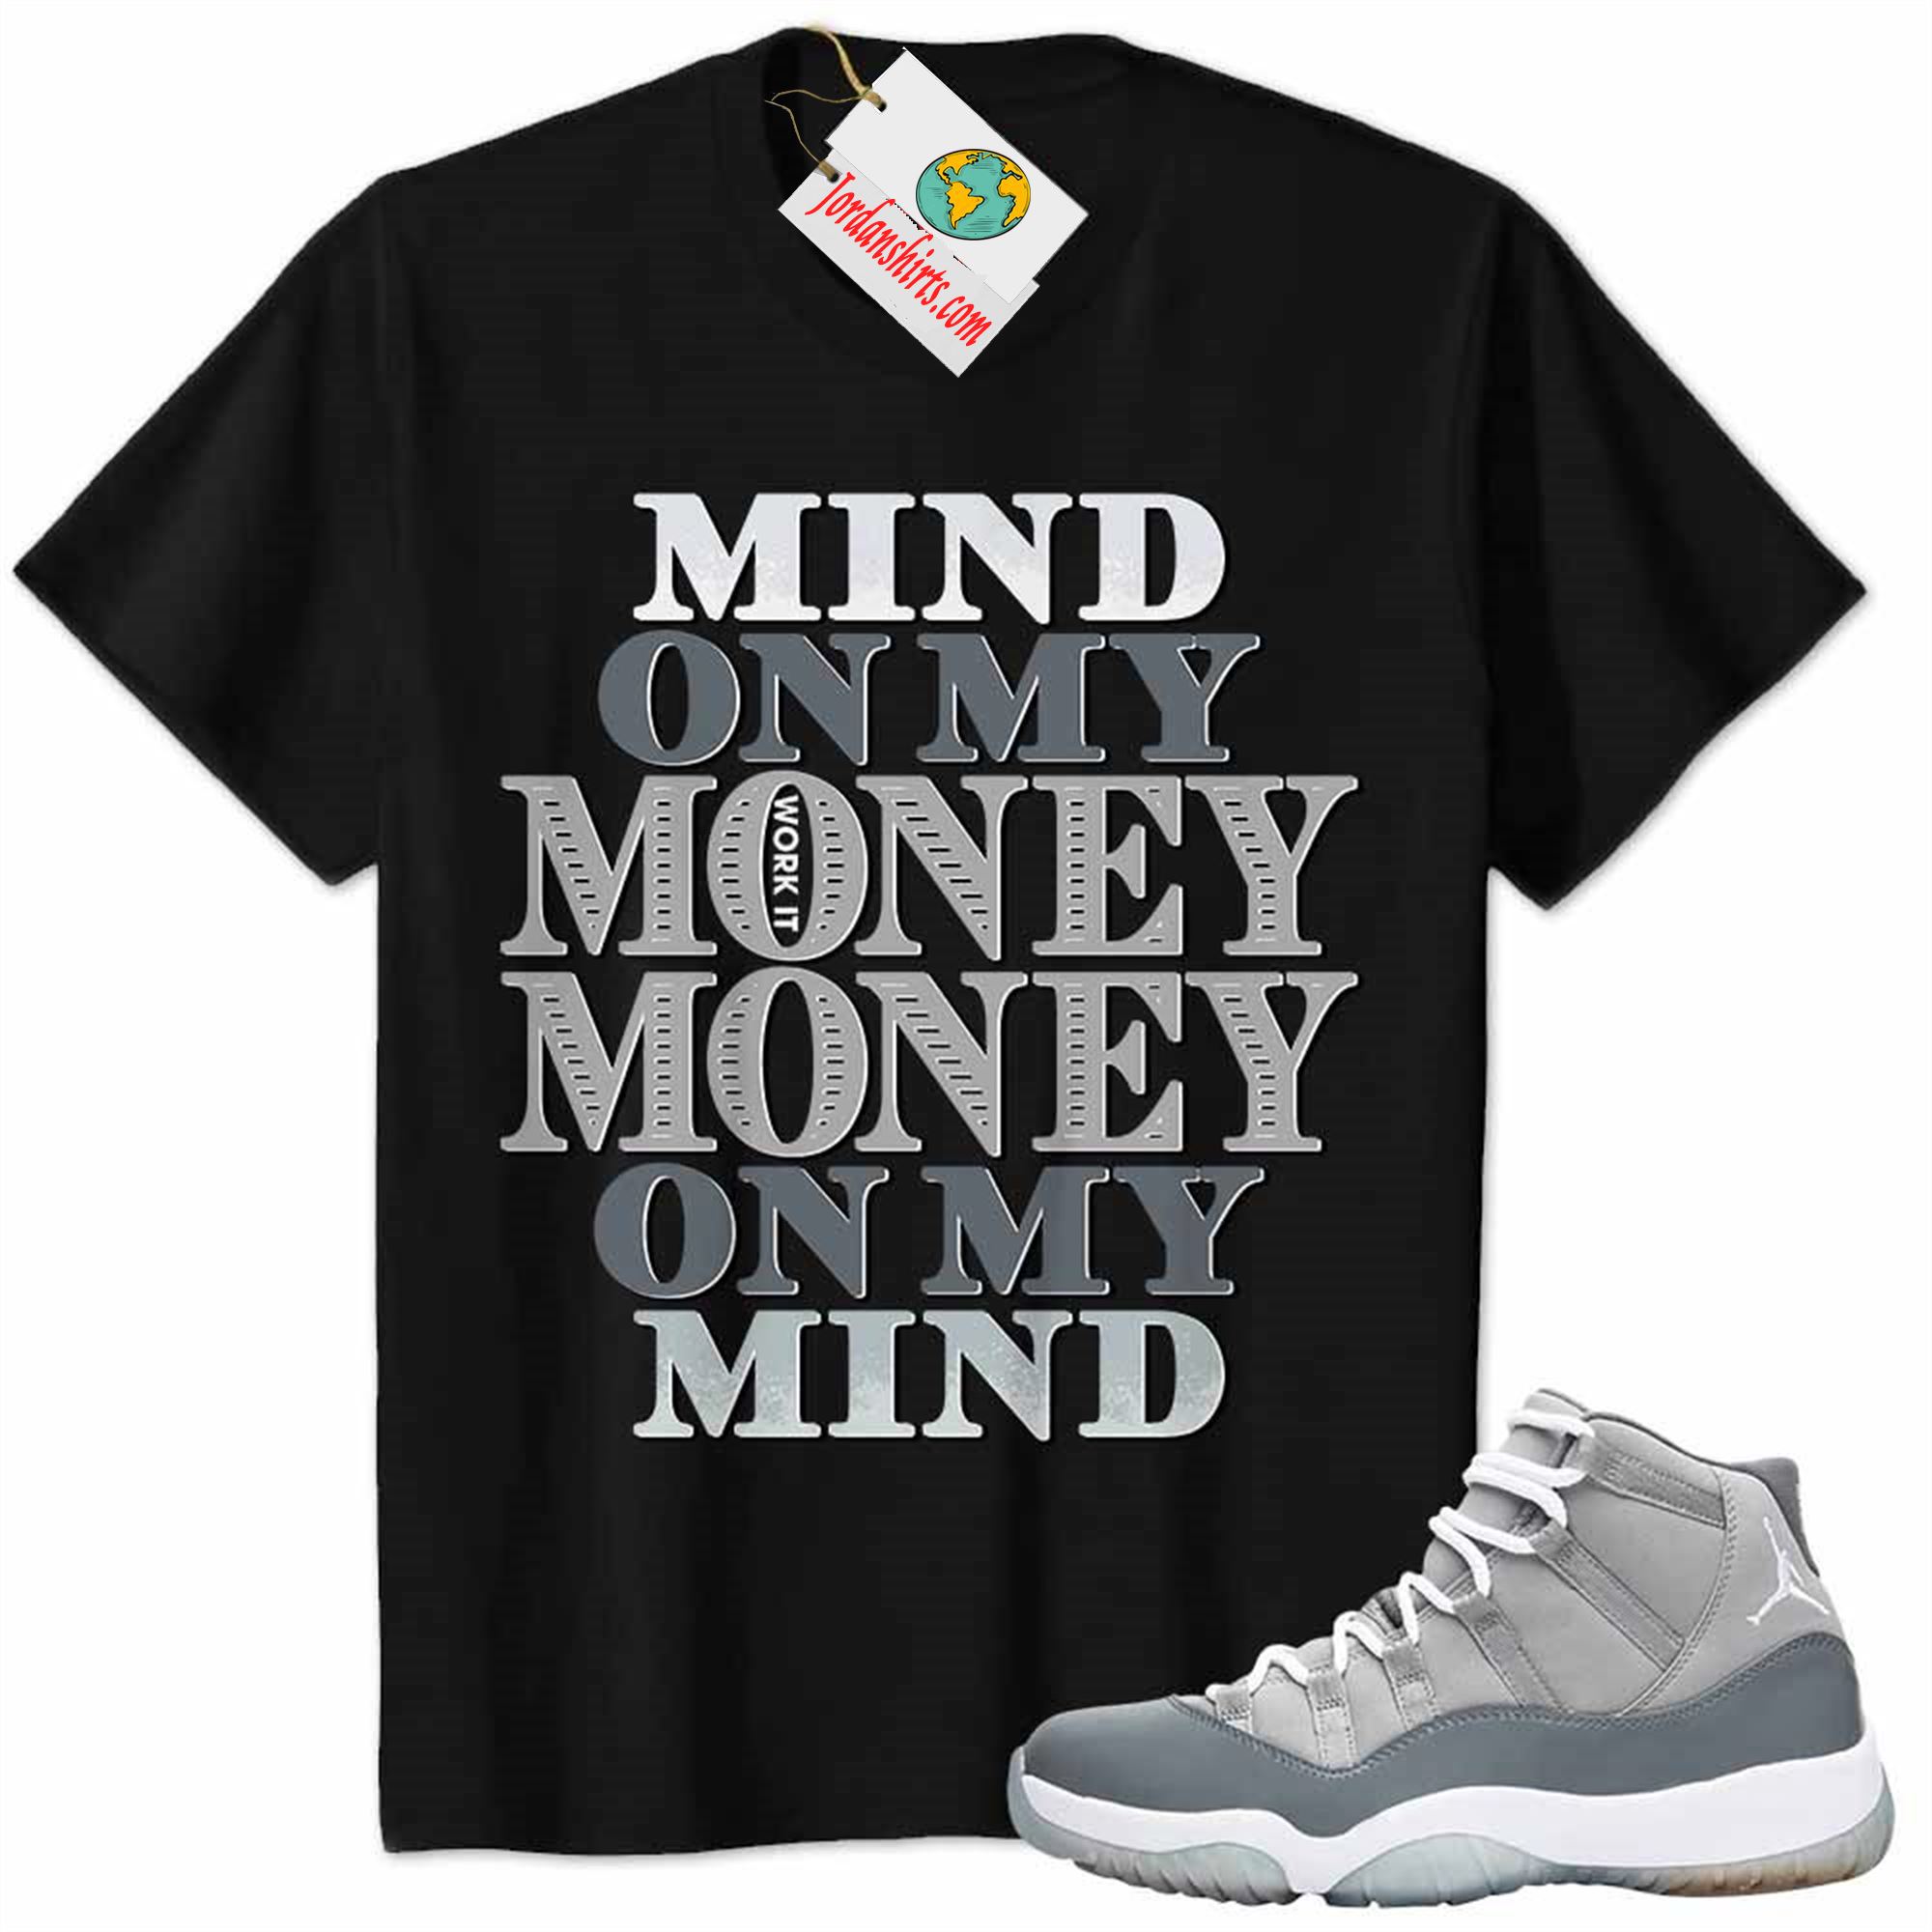 Jordan 11 Shirt, Jordan 11 Cool Grey Shirt Mind On My Money Money On My Mind Black Plus Size Up To 5xl